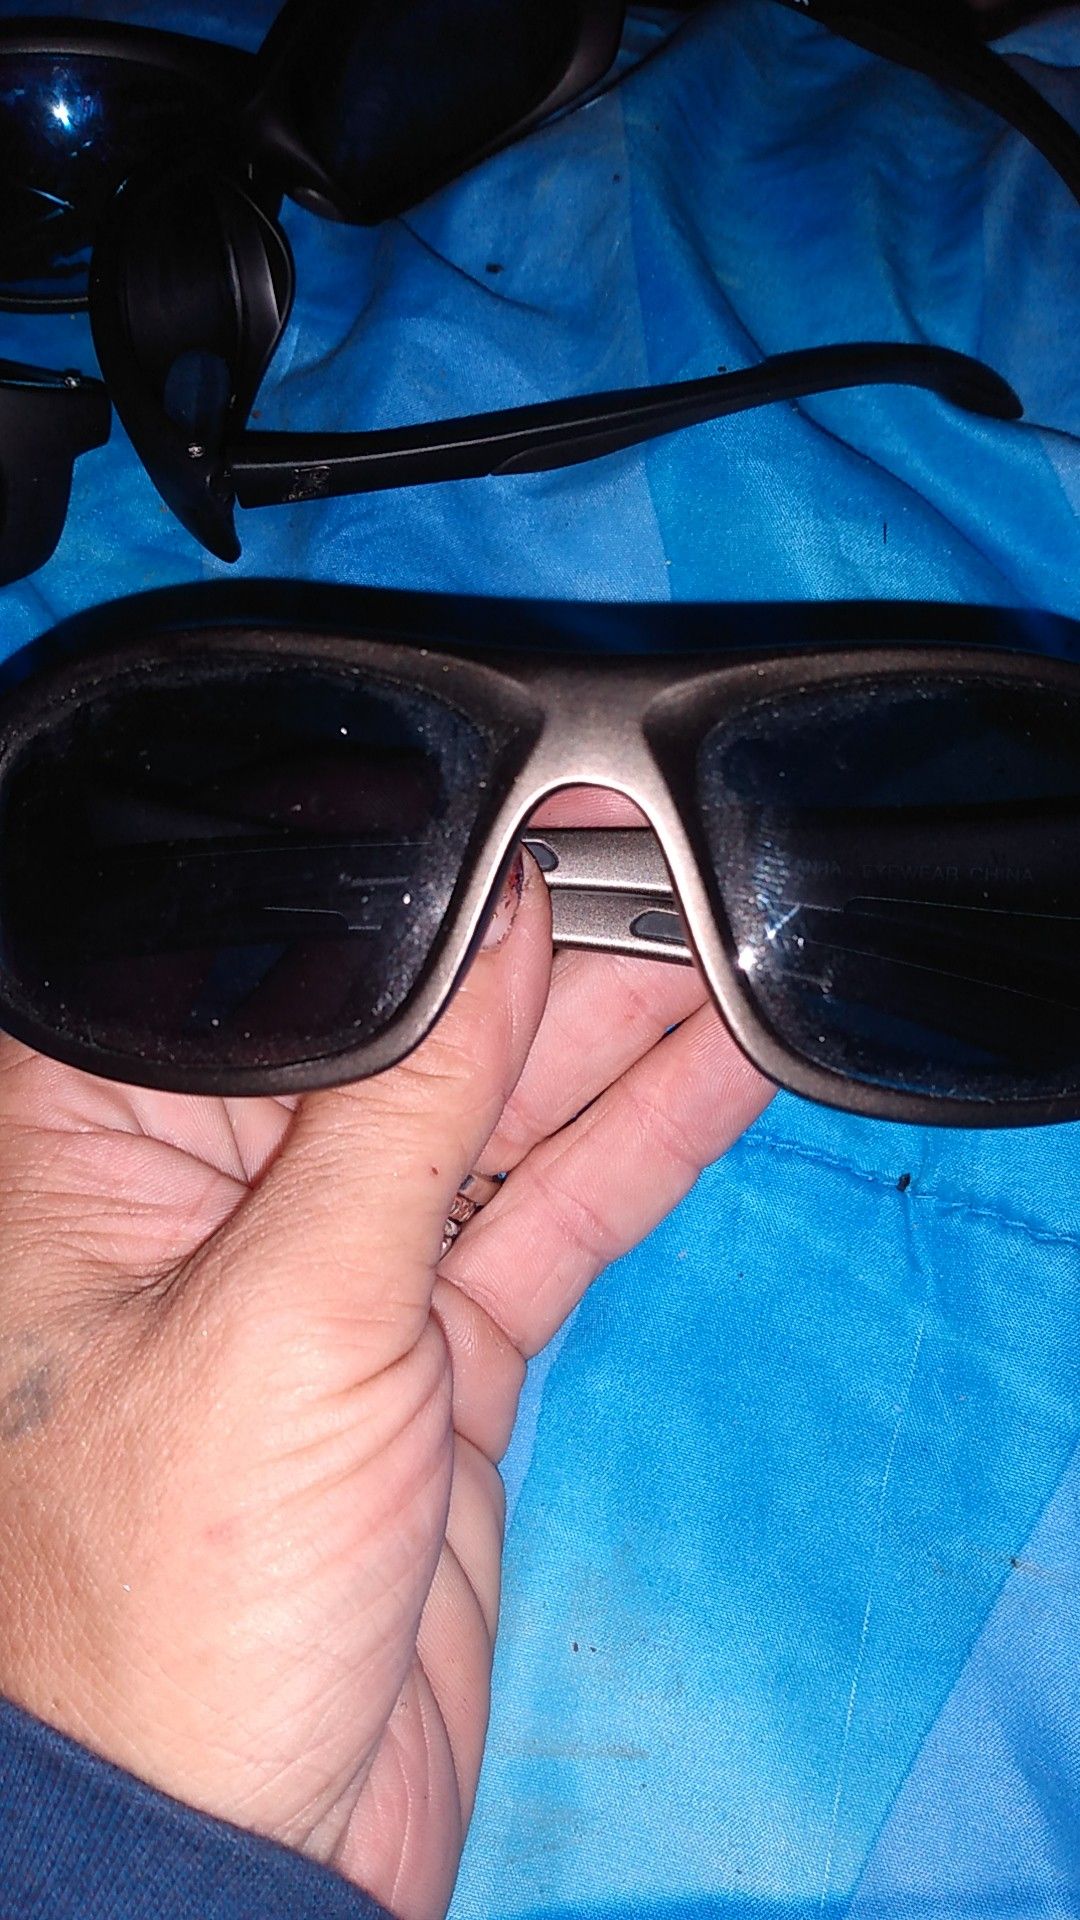 Piranha sunglasses nice pair